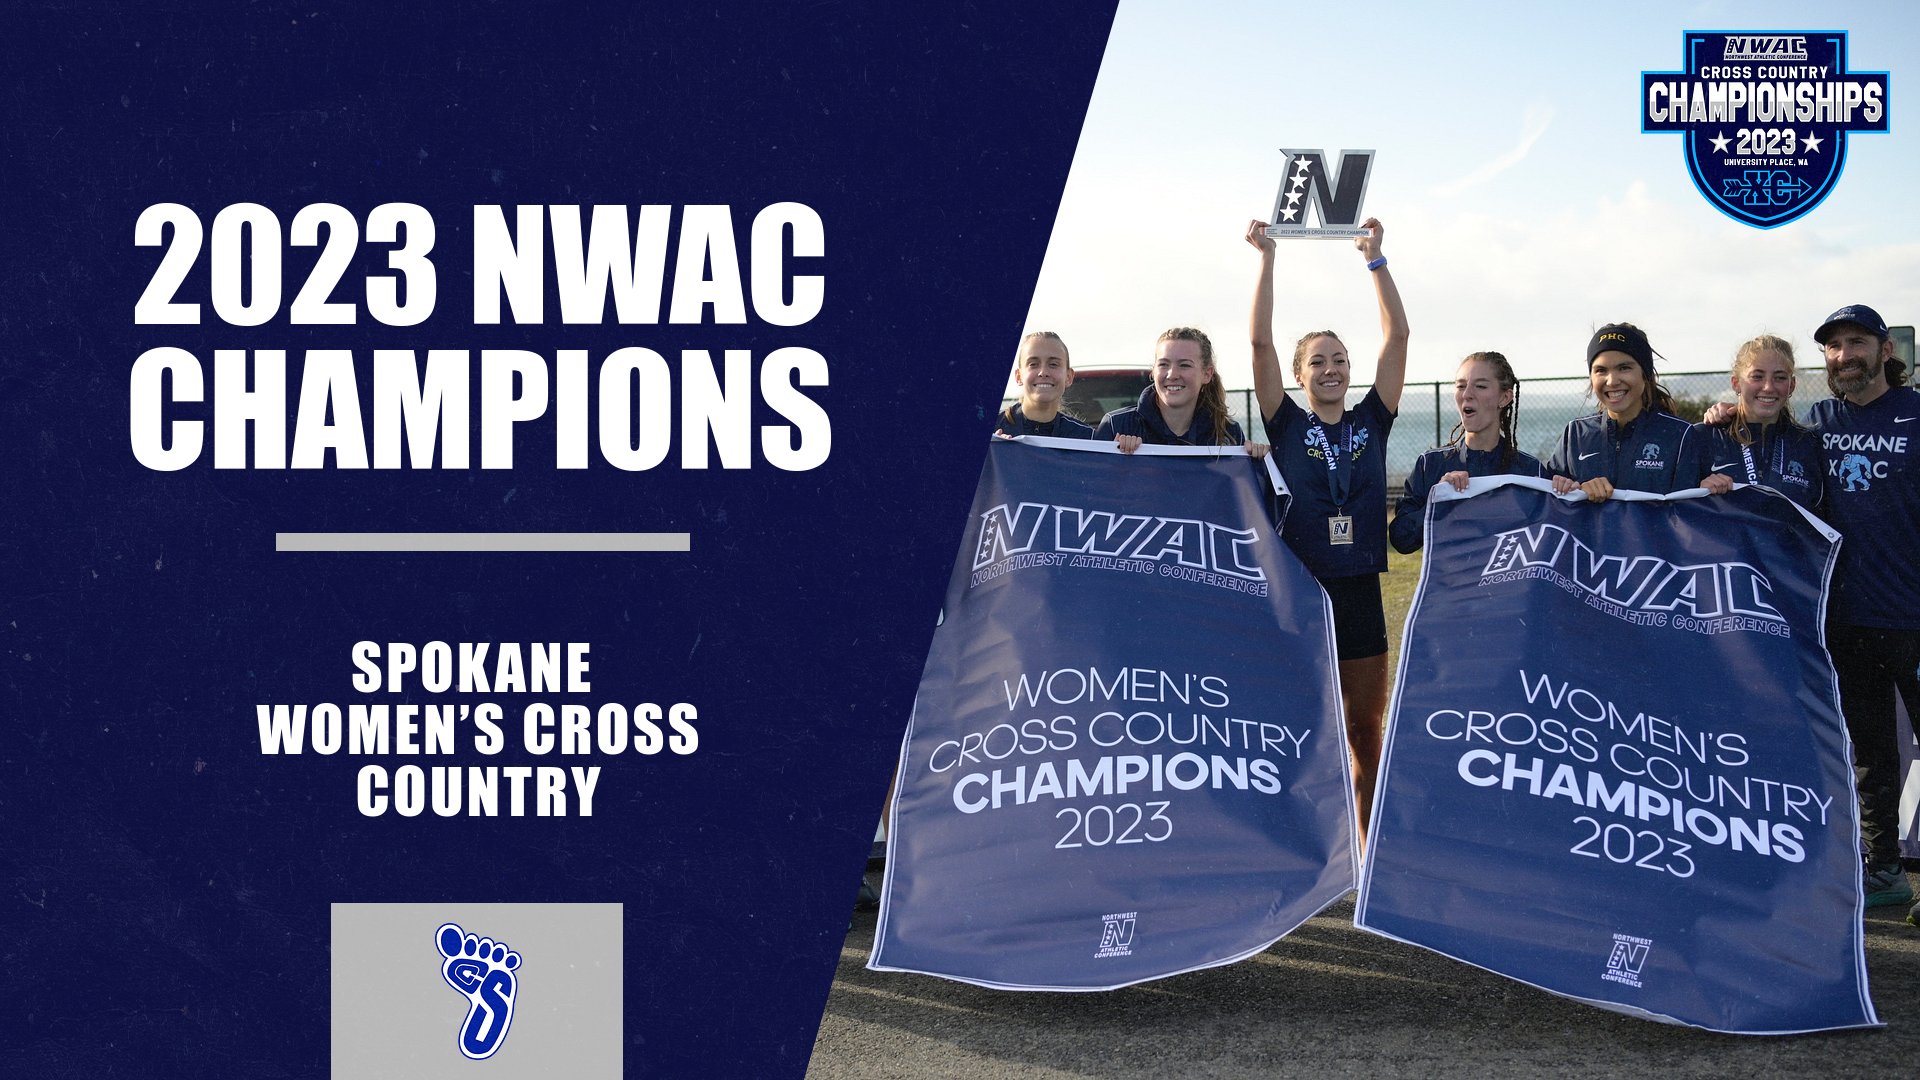 Spokane Women's Cross Country Finish 2 Through 5 to Claim 19th NWAC Title